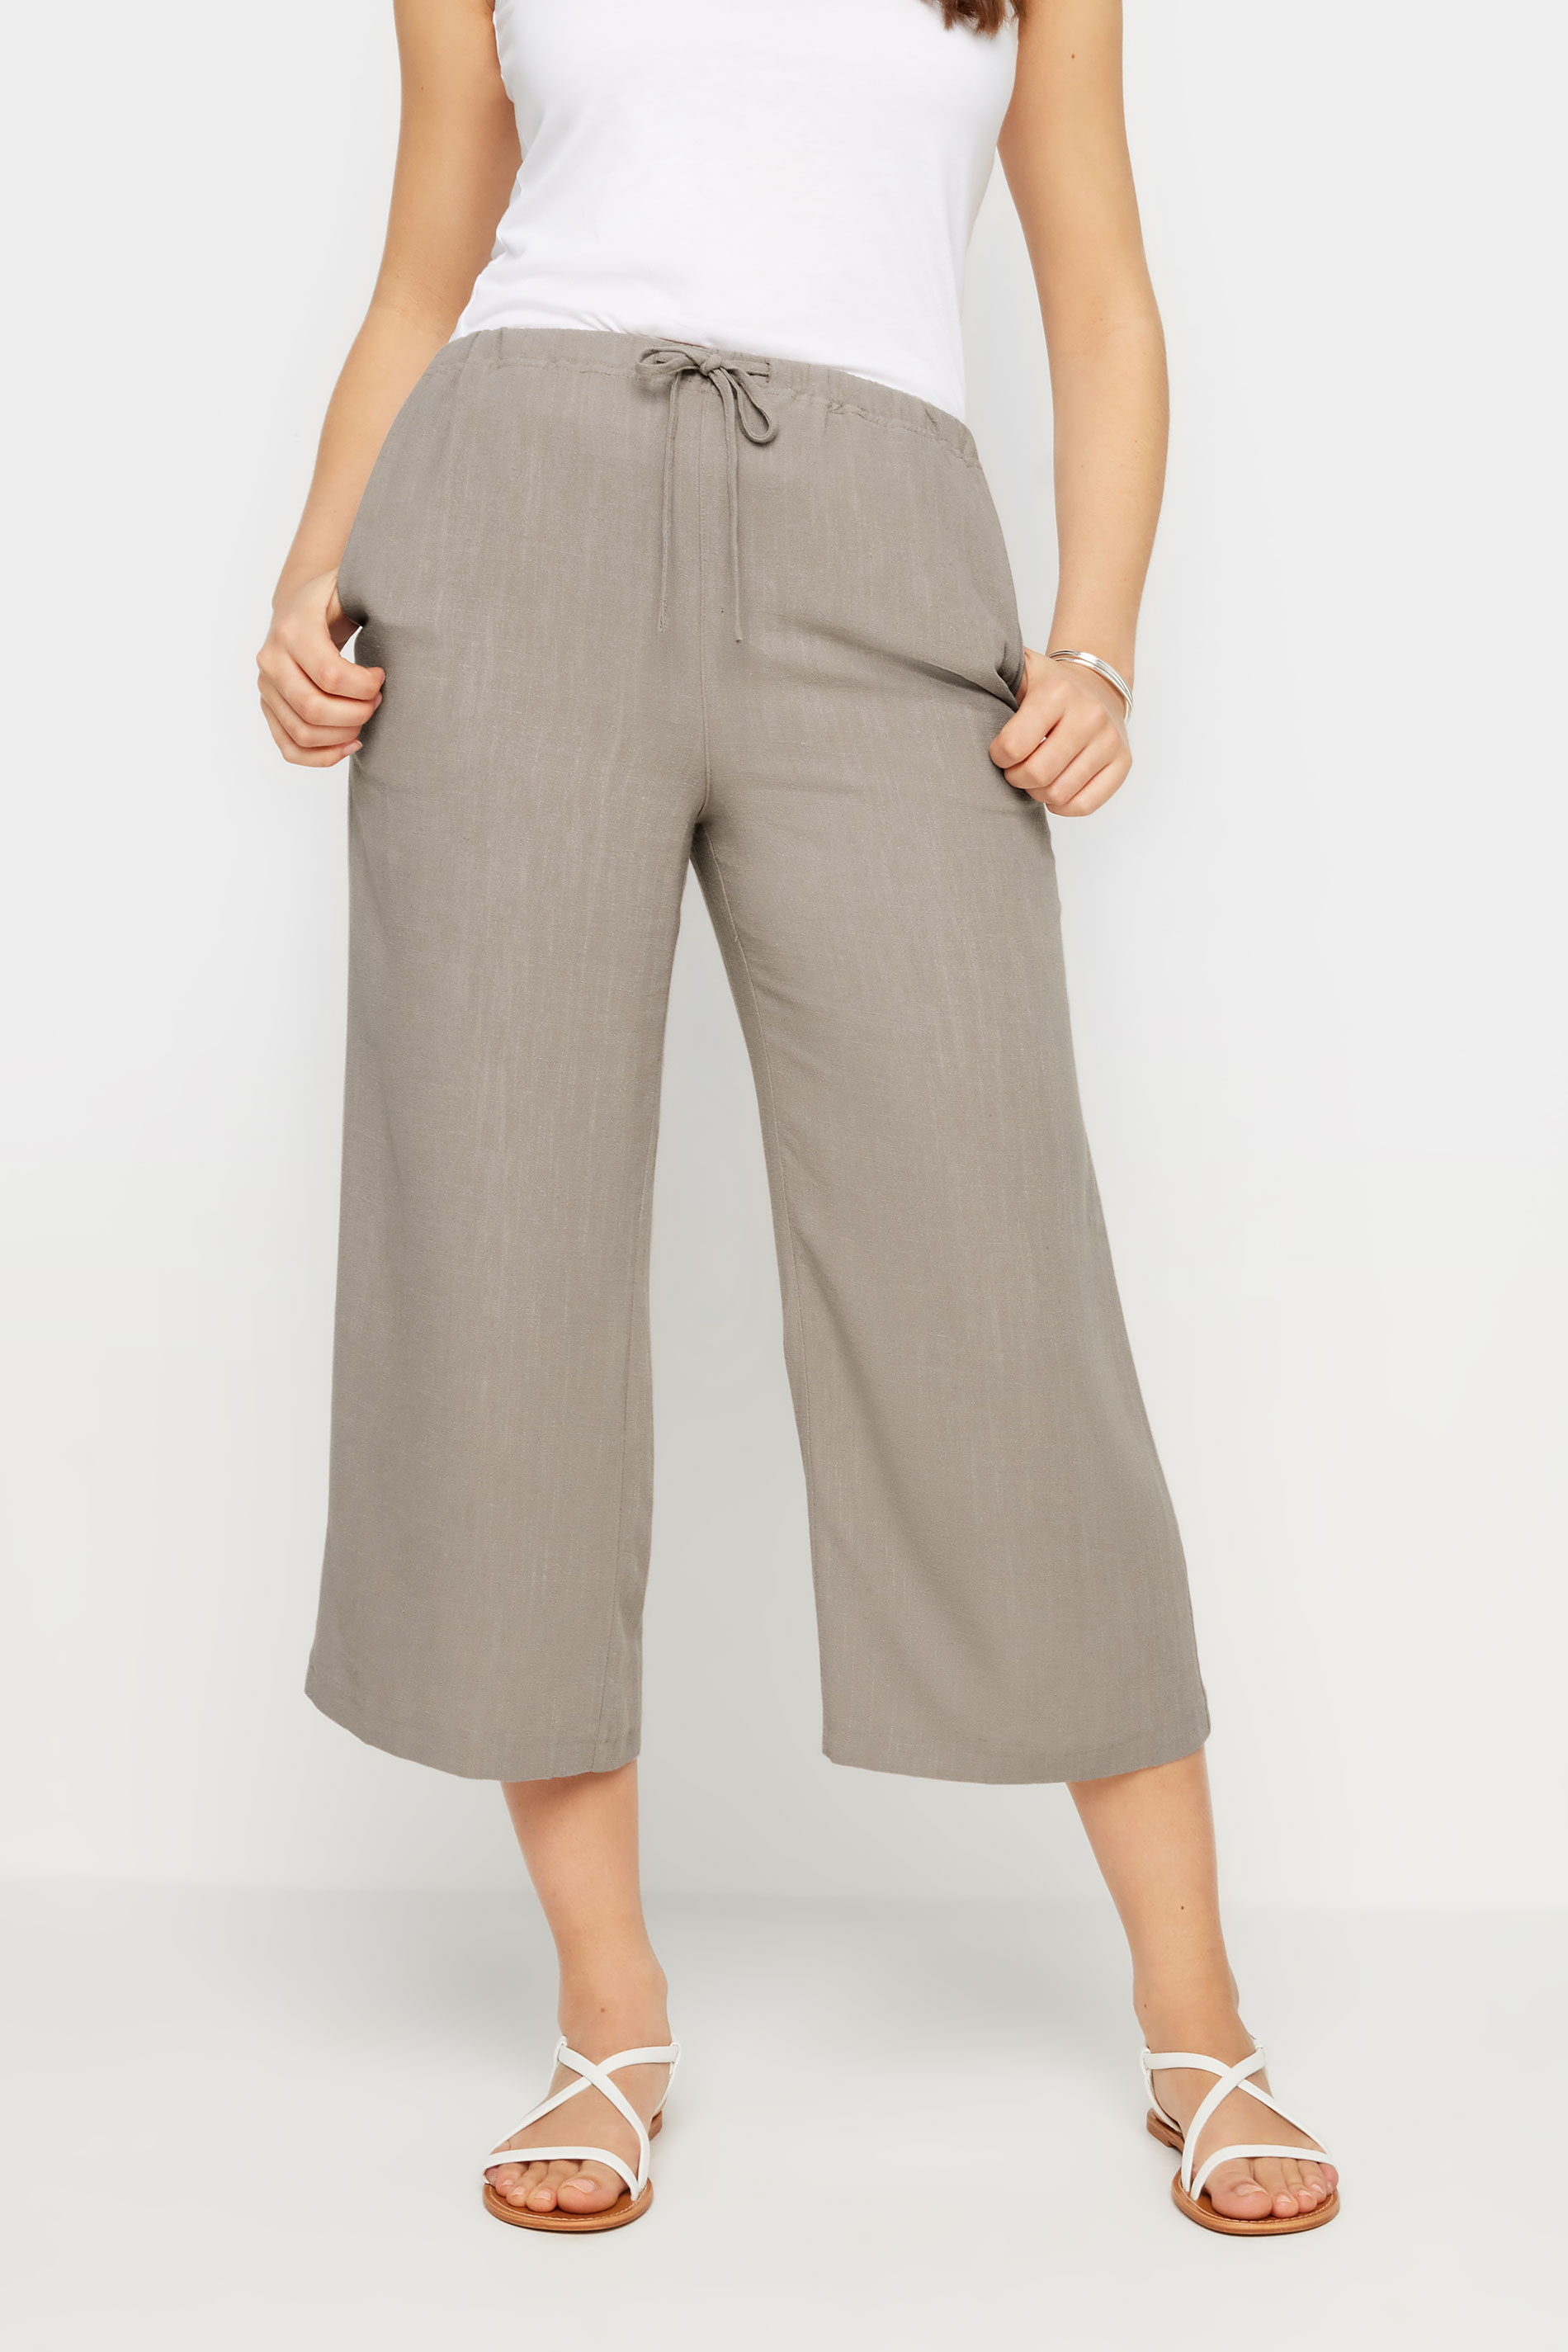 LTS Tall Women's Beige Brown Linen Tie Waist Cropped Trousers | Long Tall Sally  2